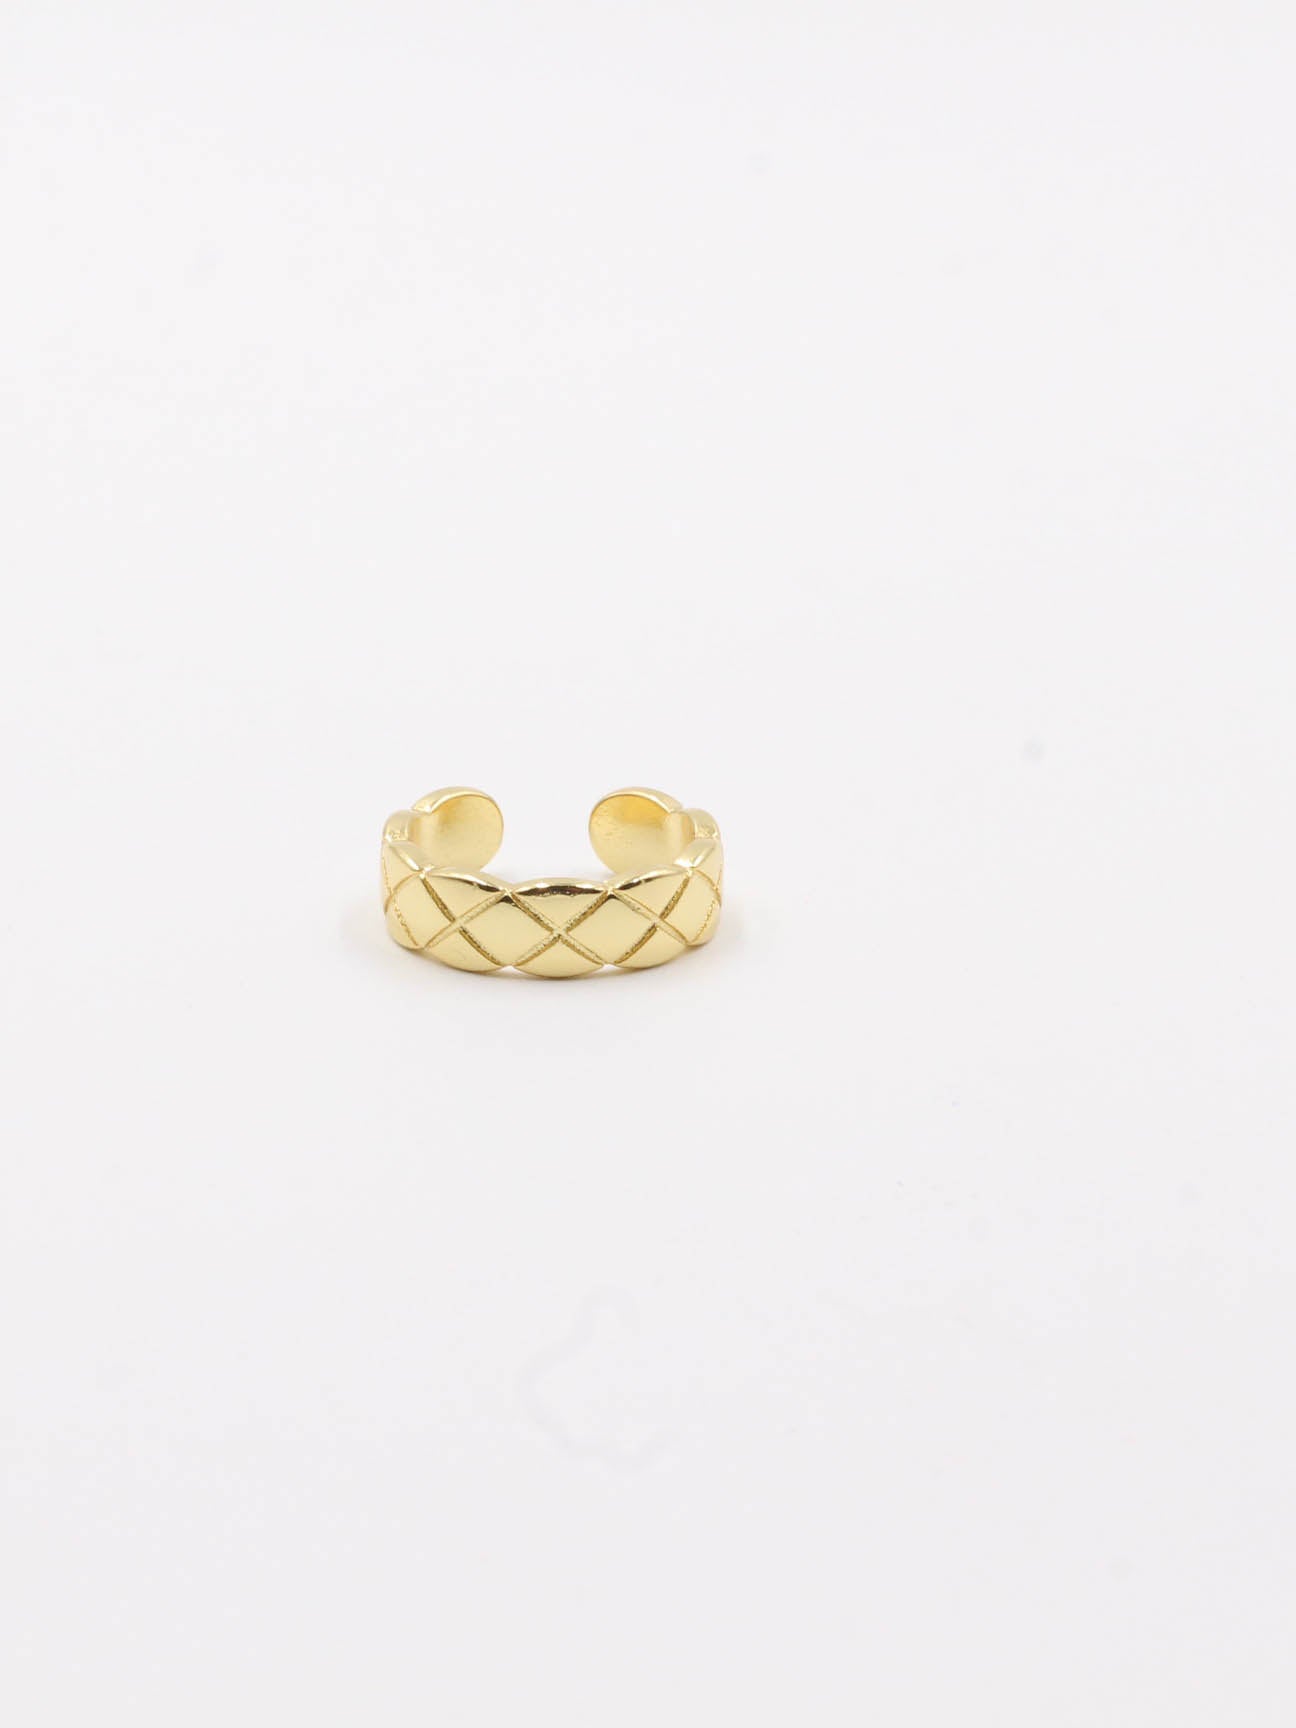 Chanel Engraved Ring - خاتم شانيل حفر خواتم Jewel ذهبي 